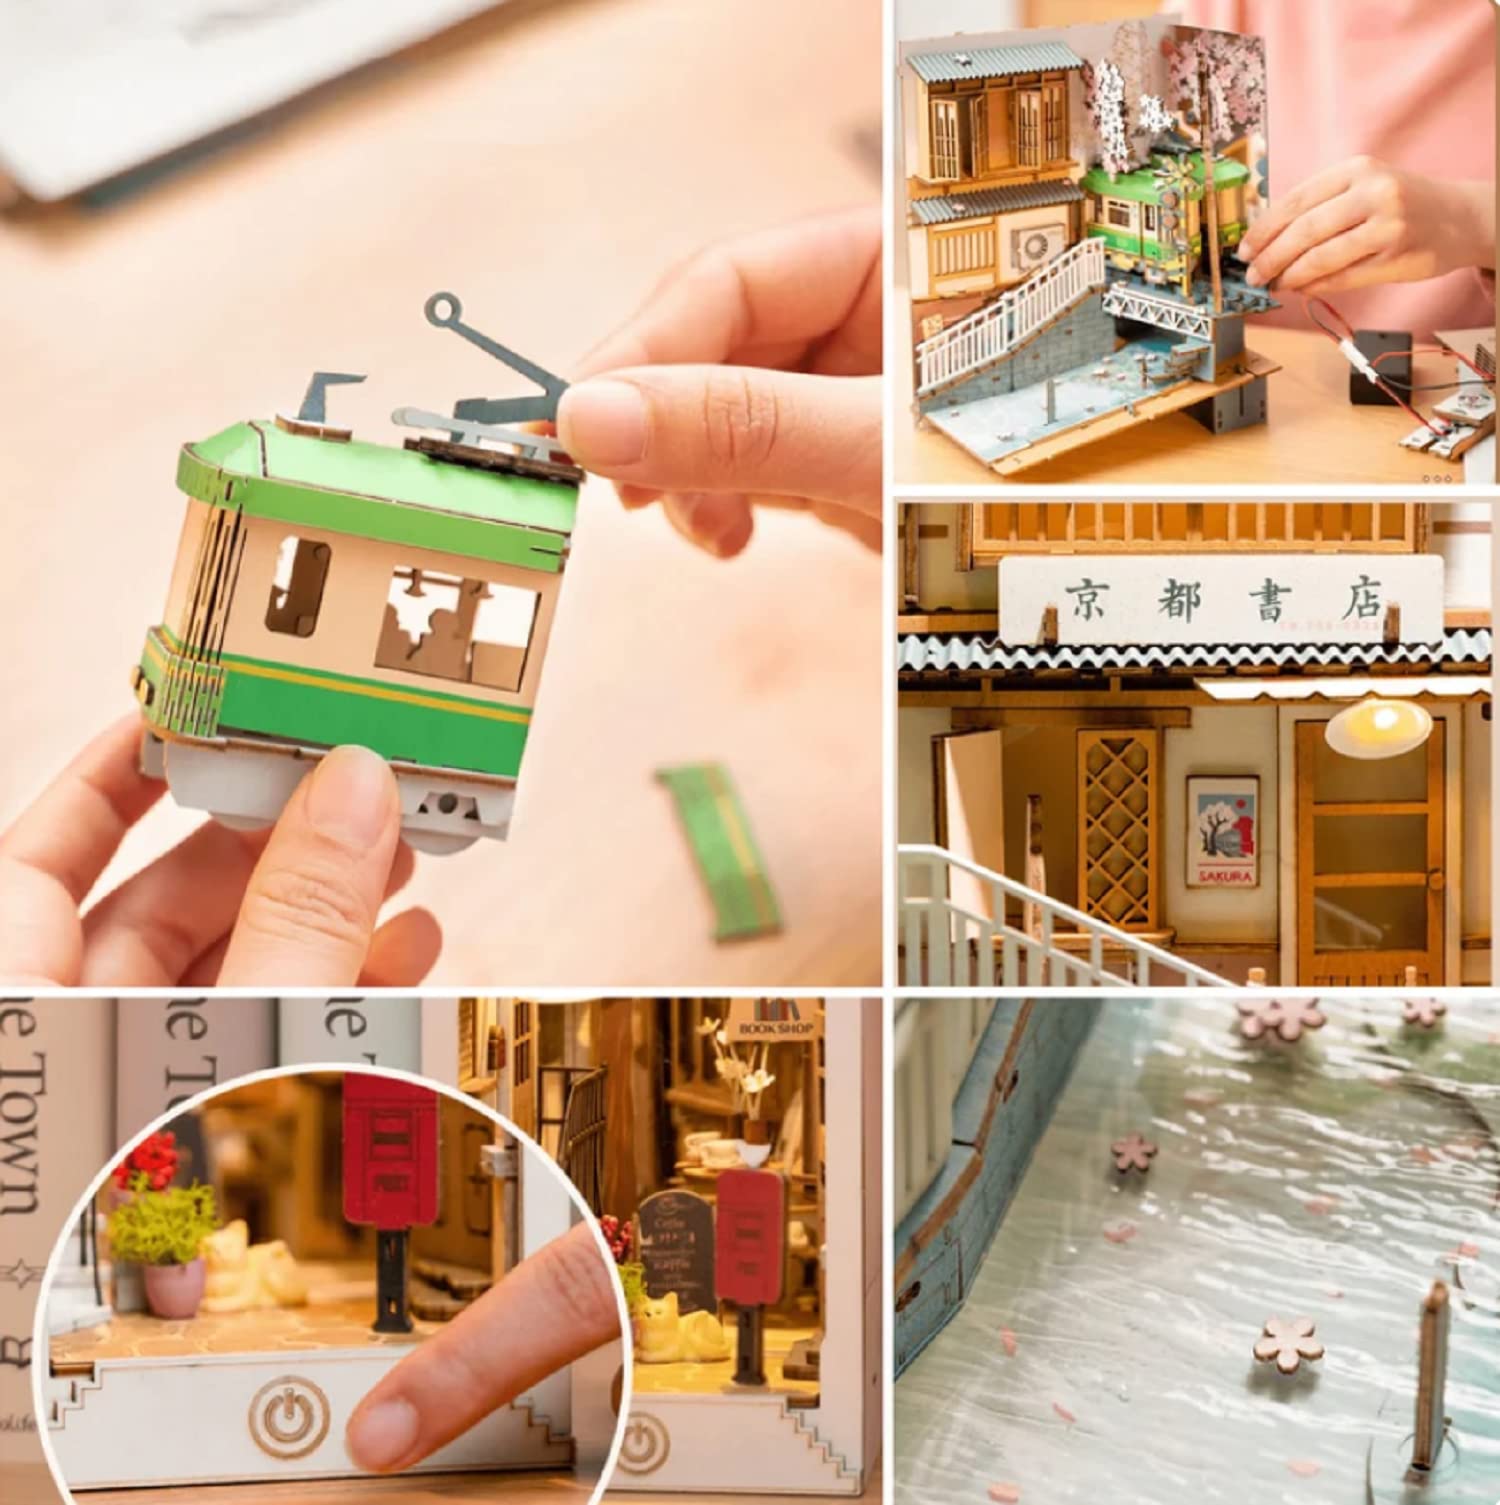 Rolife DIY Book Nook Kits Sakura Densya, 3D Wooden Puzzles Bookshelf Insert Decorative Bookend Model Kits with LED, DIY Crafts/Birthday Gifts/Home Decor for Girls&Boys Teens&Adults (Sakura Densya)